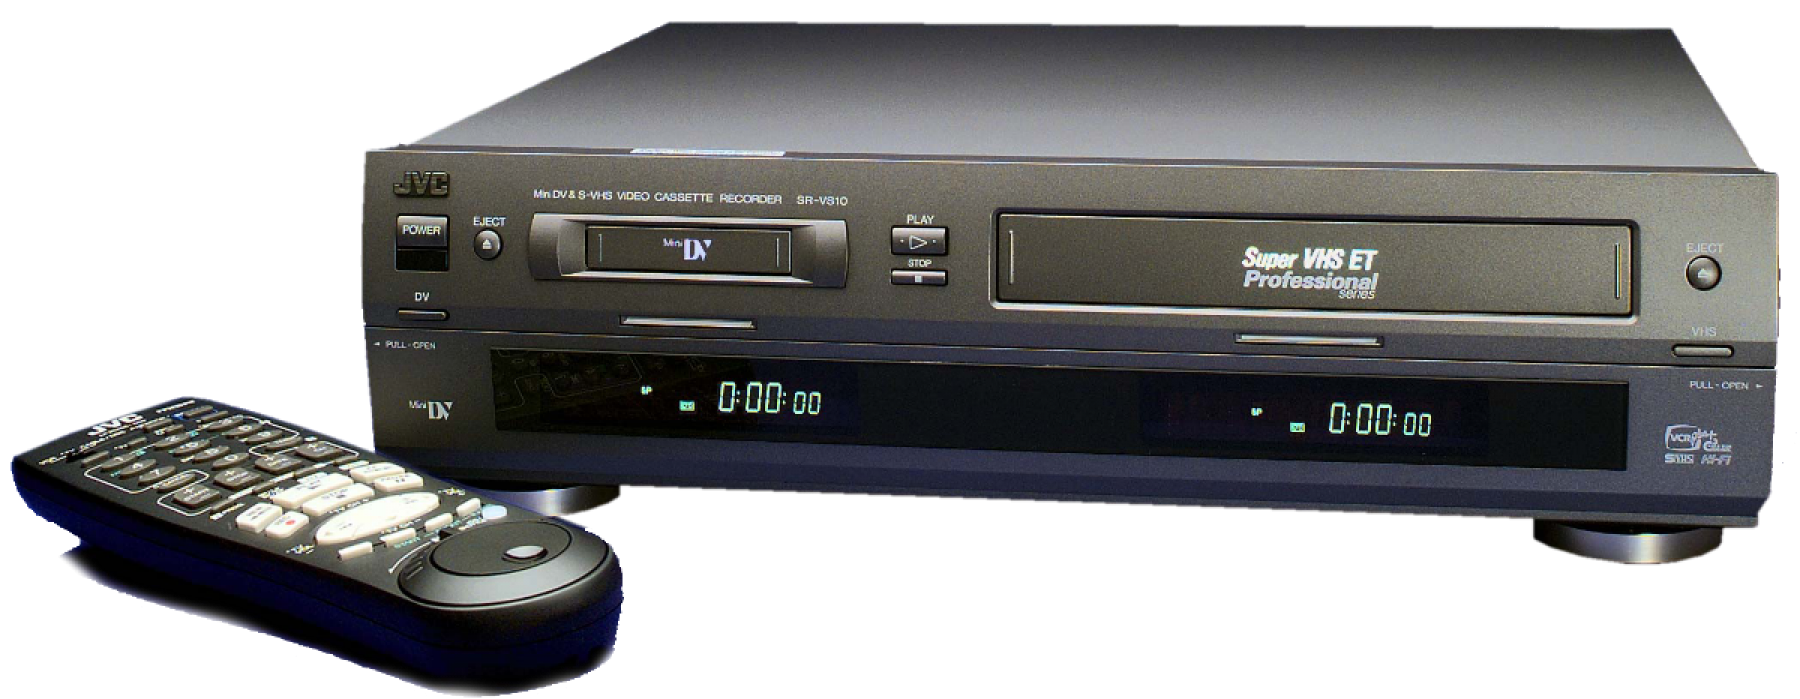 Download Vcrs Vhs Accessory Instrument Videocassette Jvc Recorder HQ PNG Image | FreePNGImg